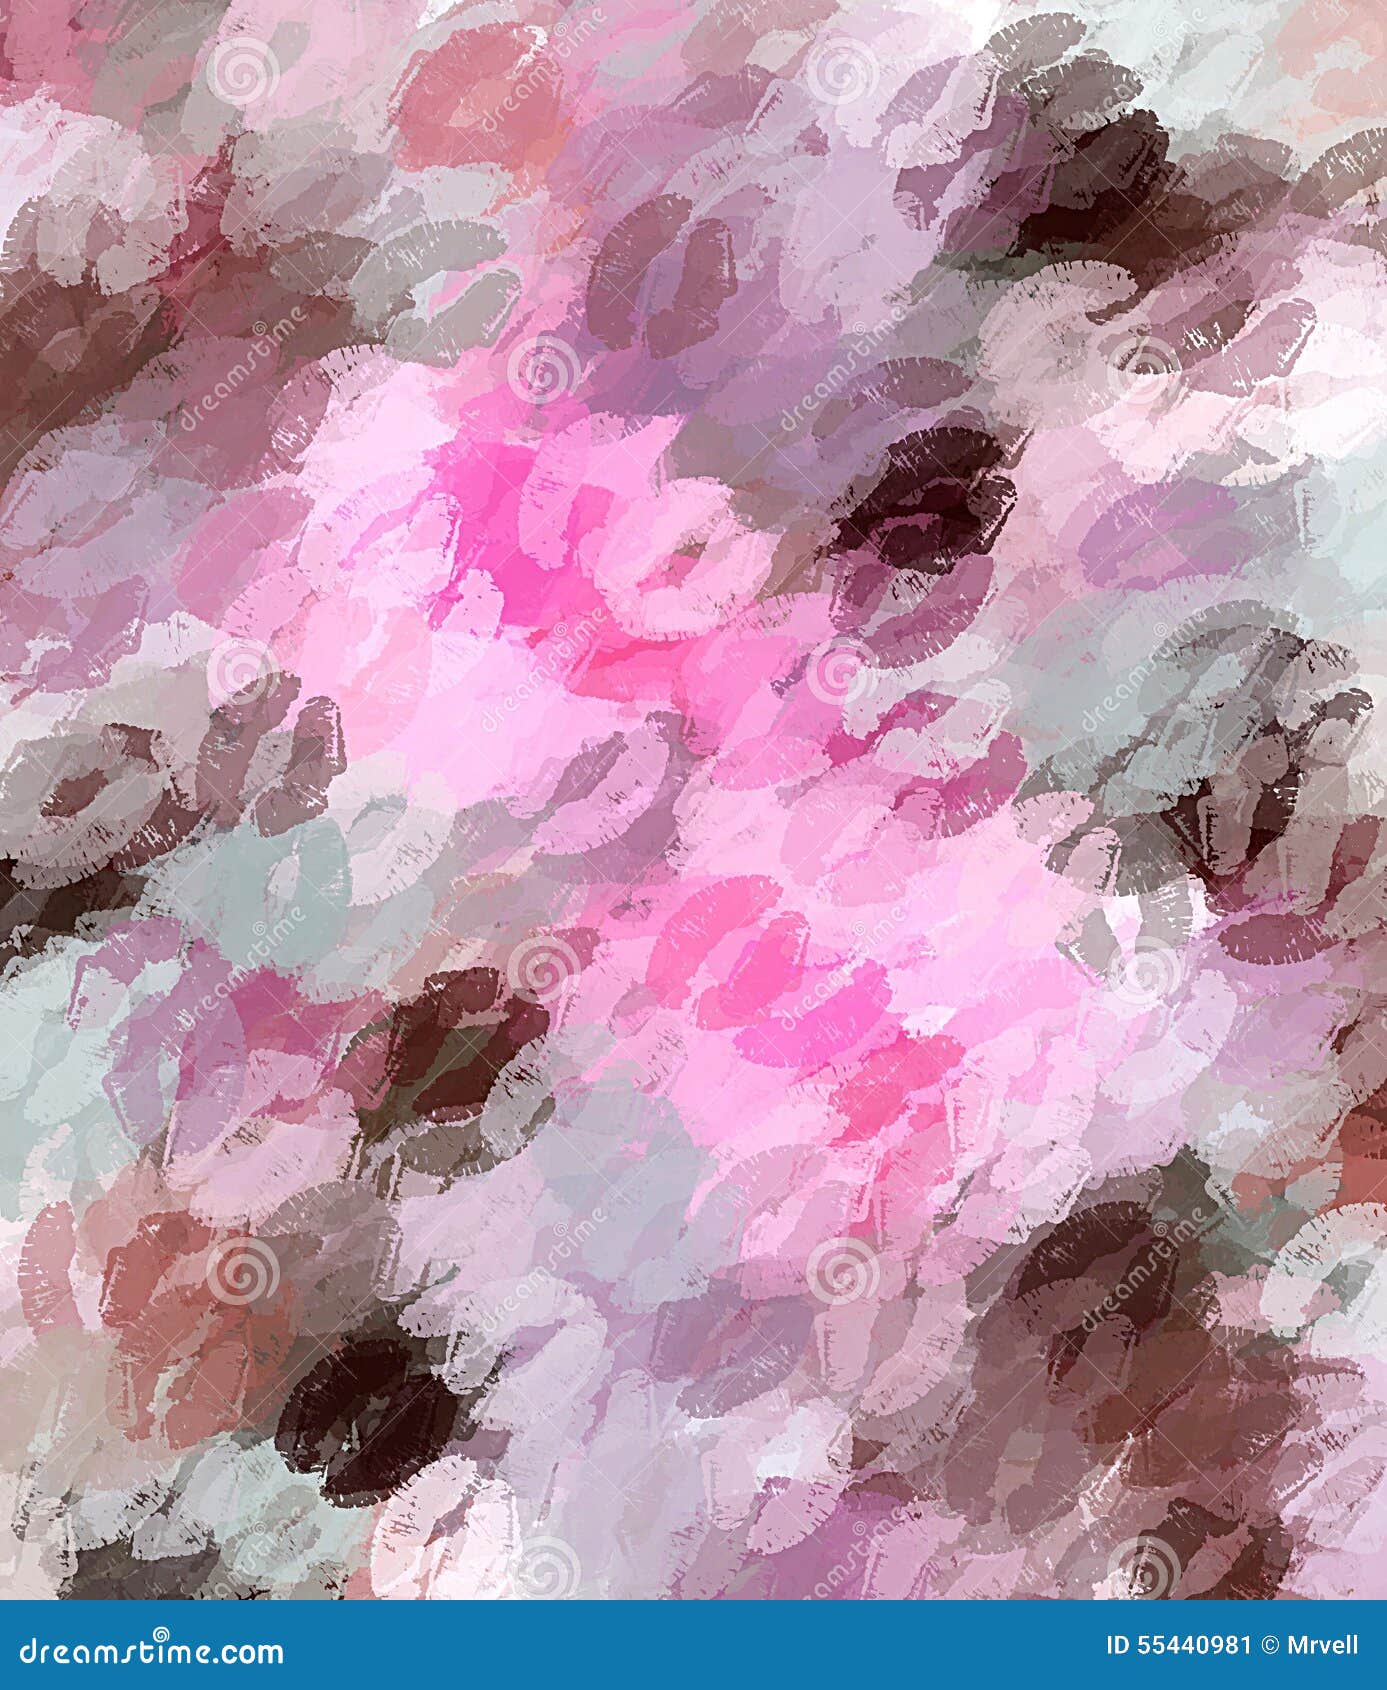 Pink kiss background stock illustration. Illustration of romantic ...